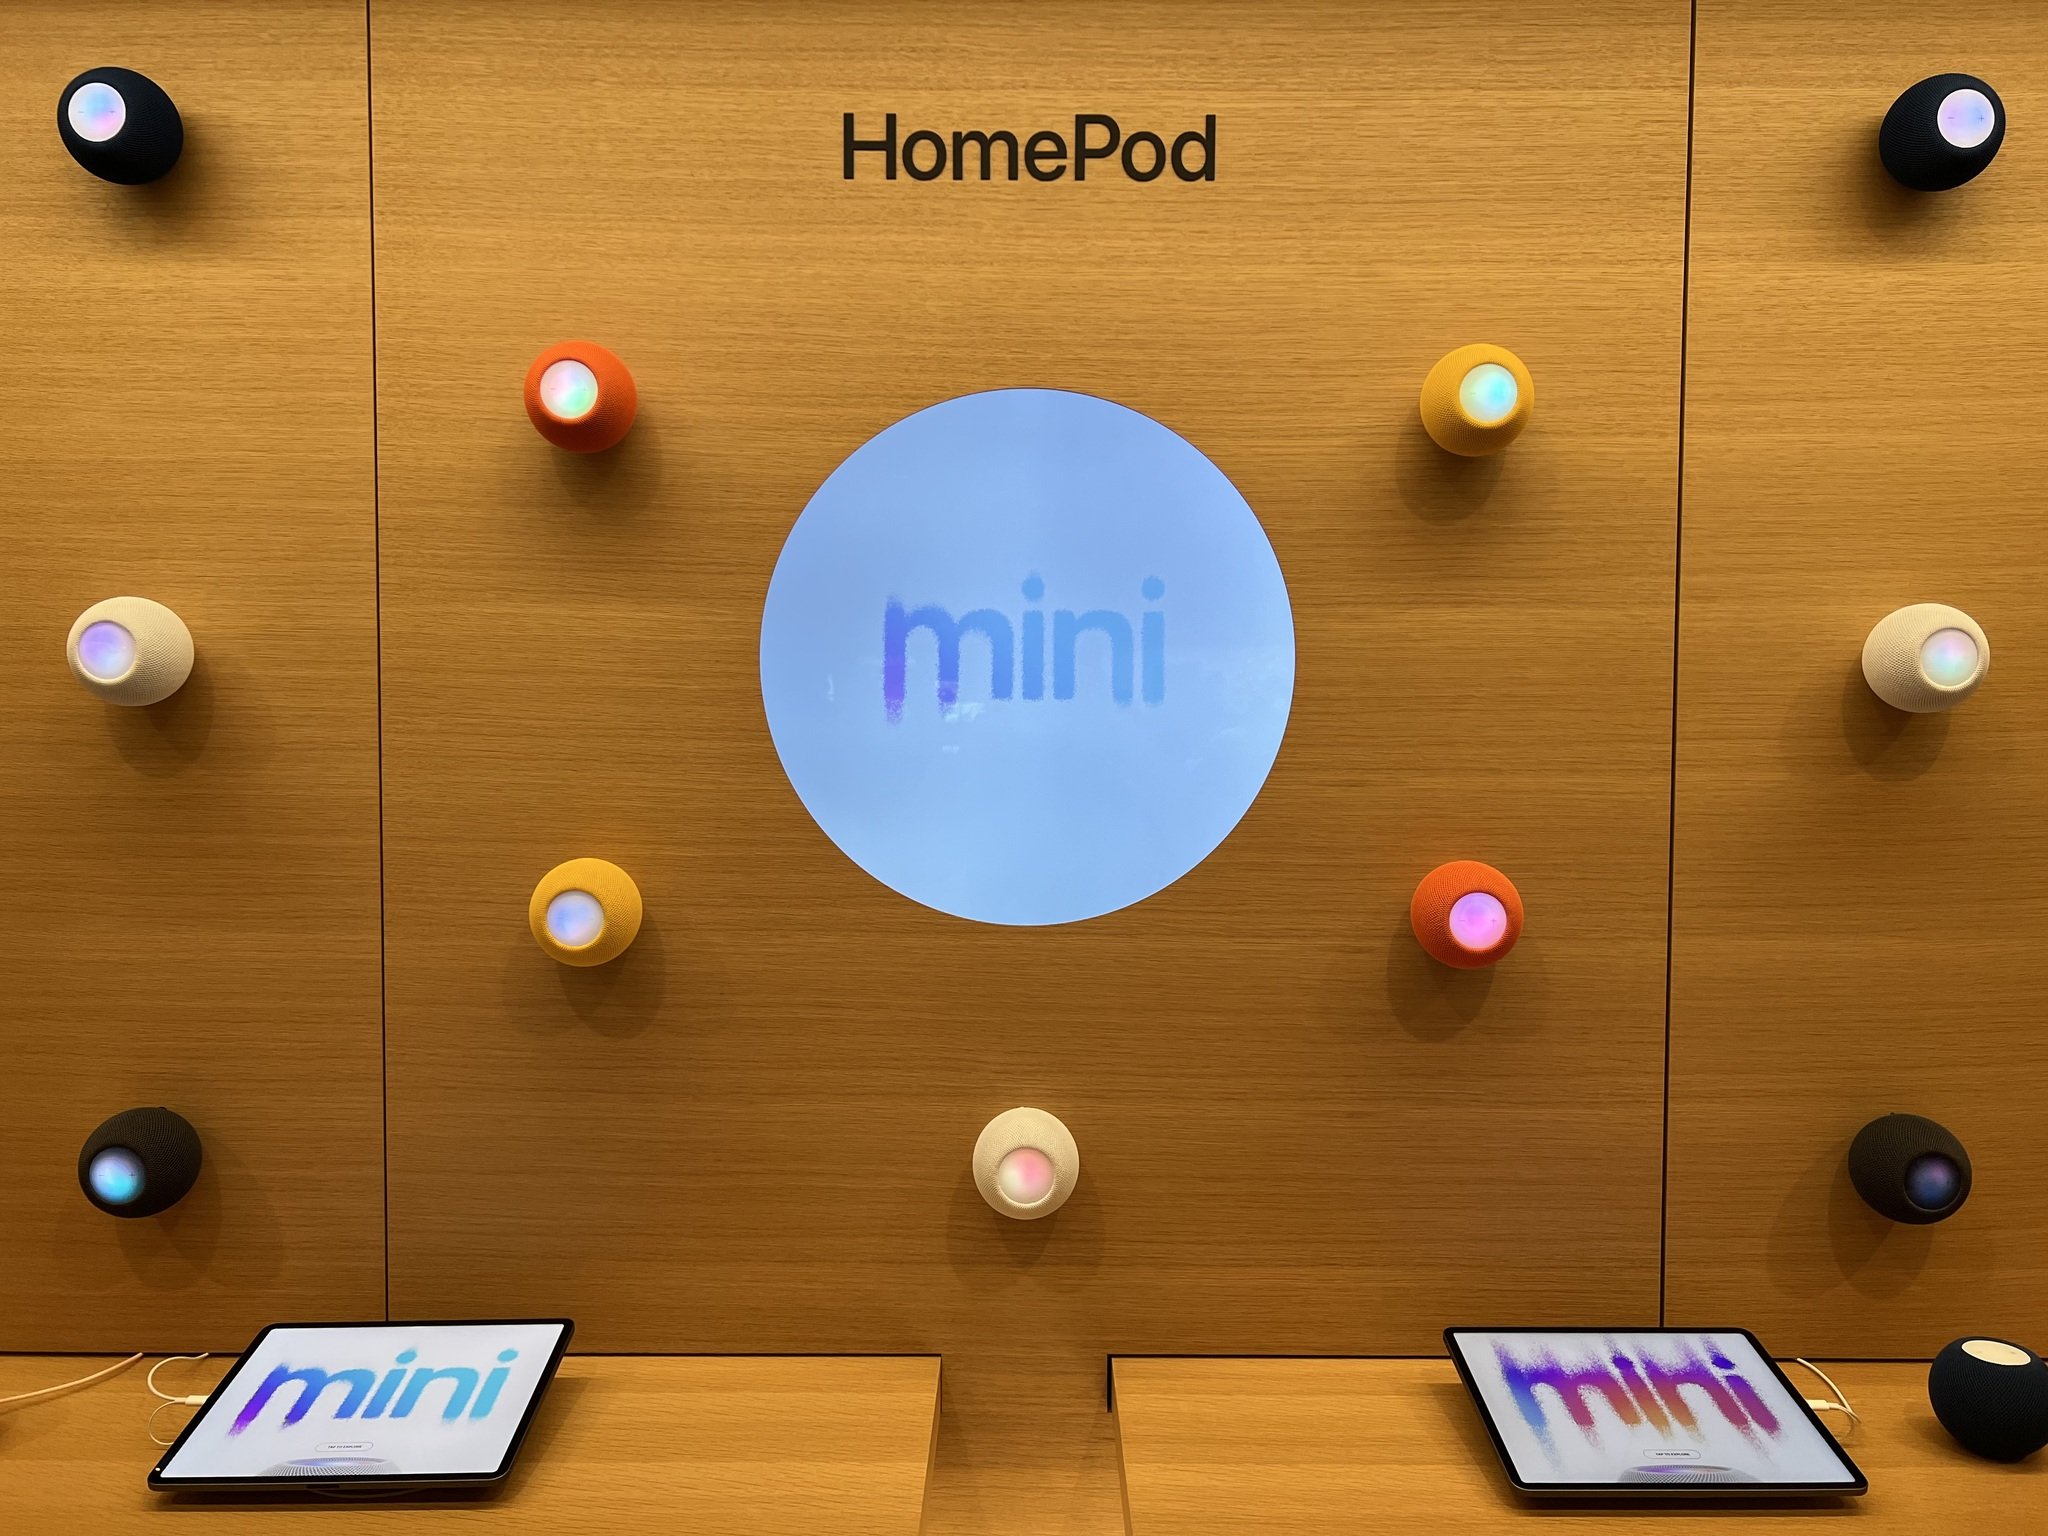 Homepod Mini Apple Store Display Lifestyle